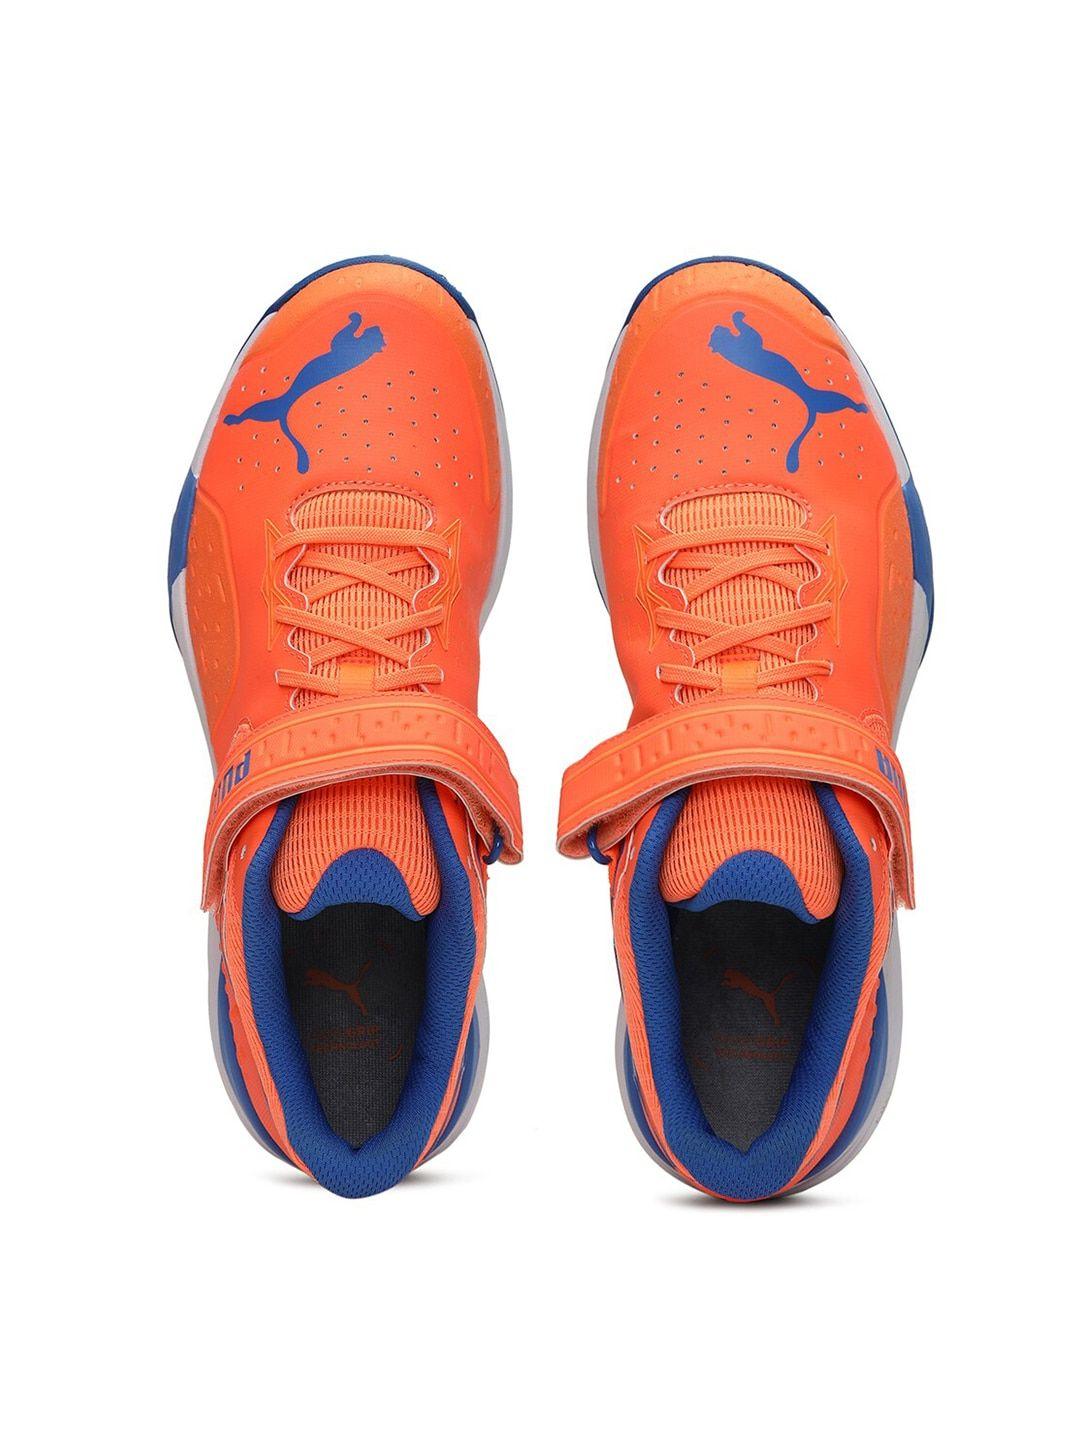 puma-orange-&-blue-bowling-22.1-cricket-shoes